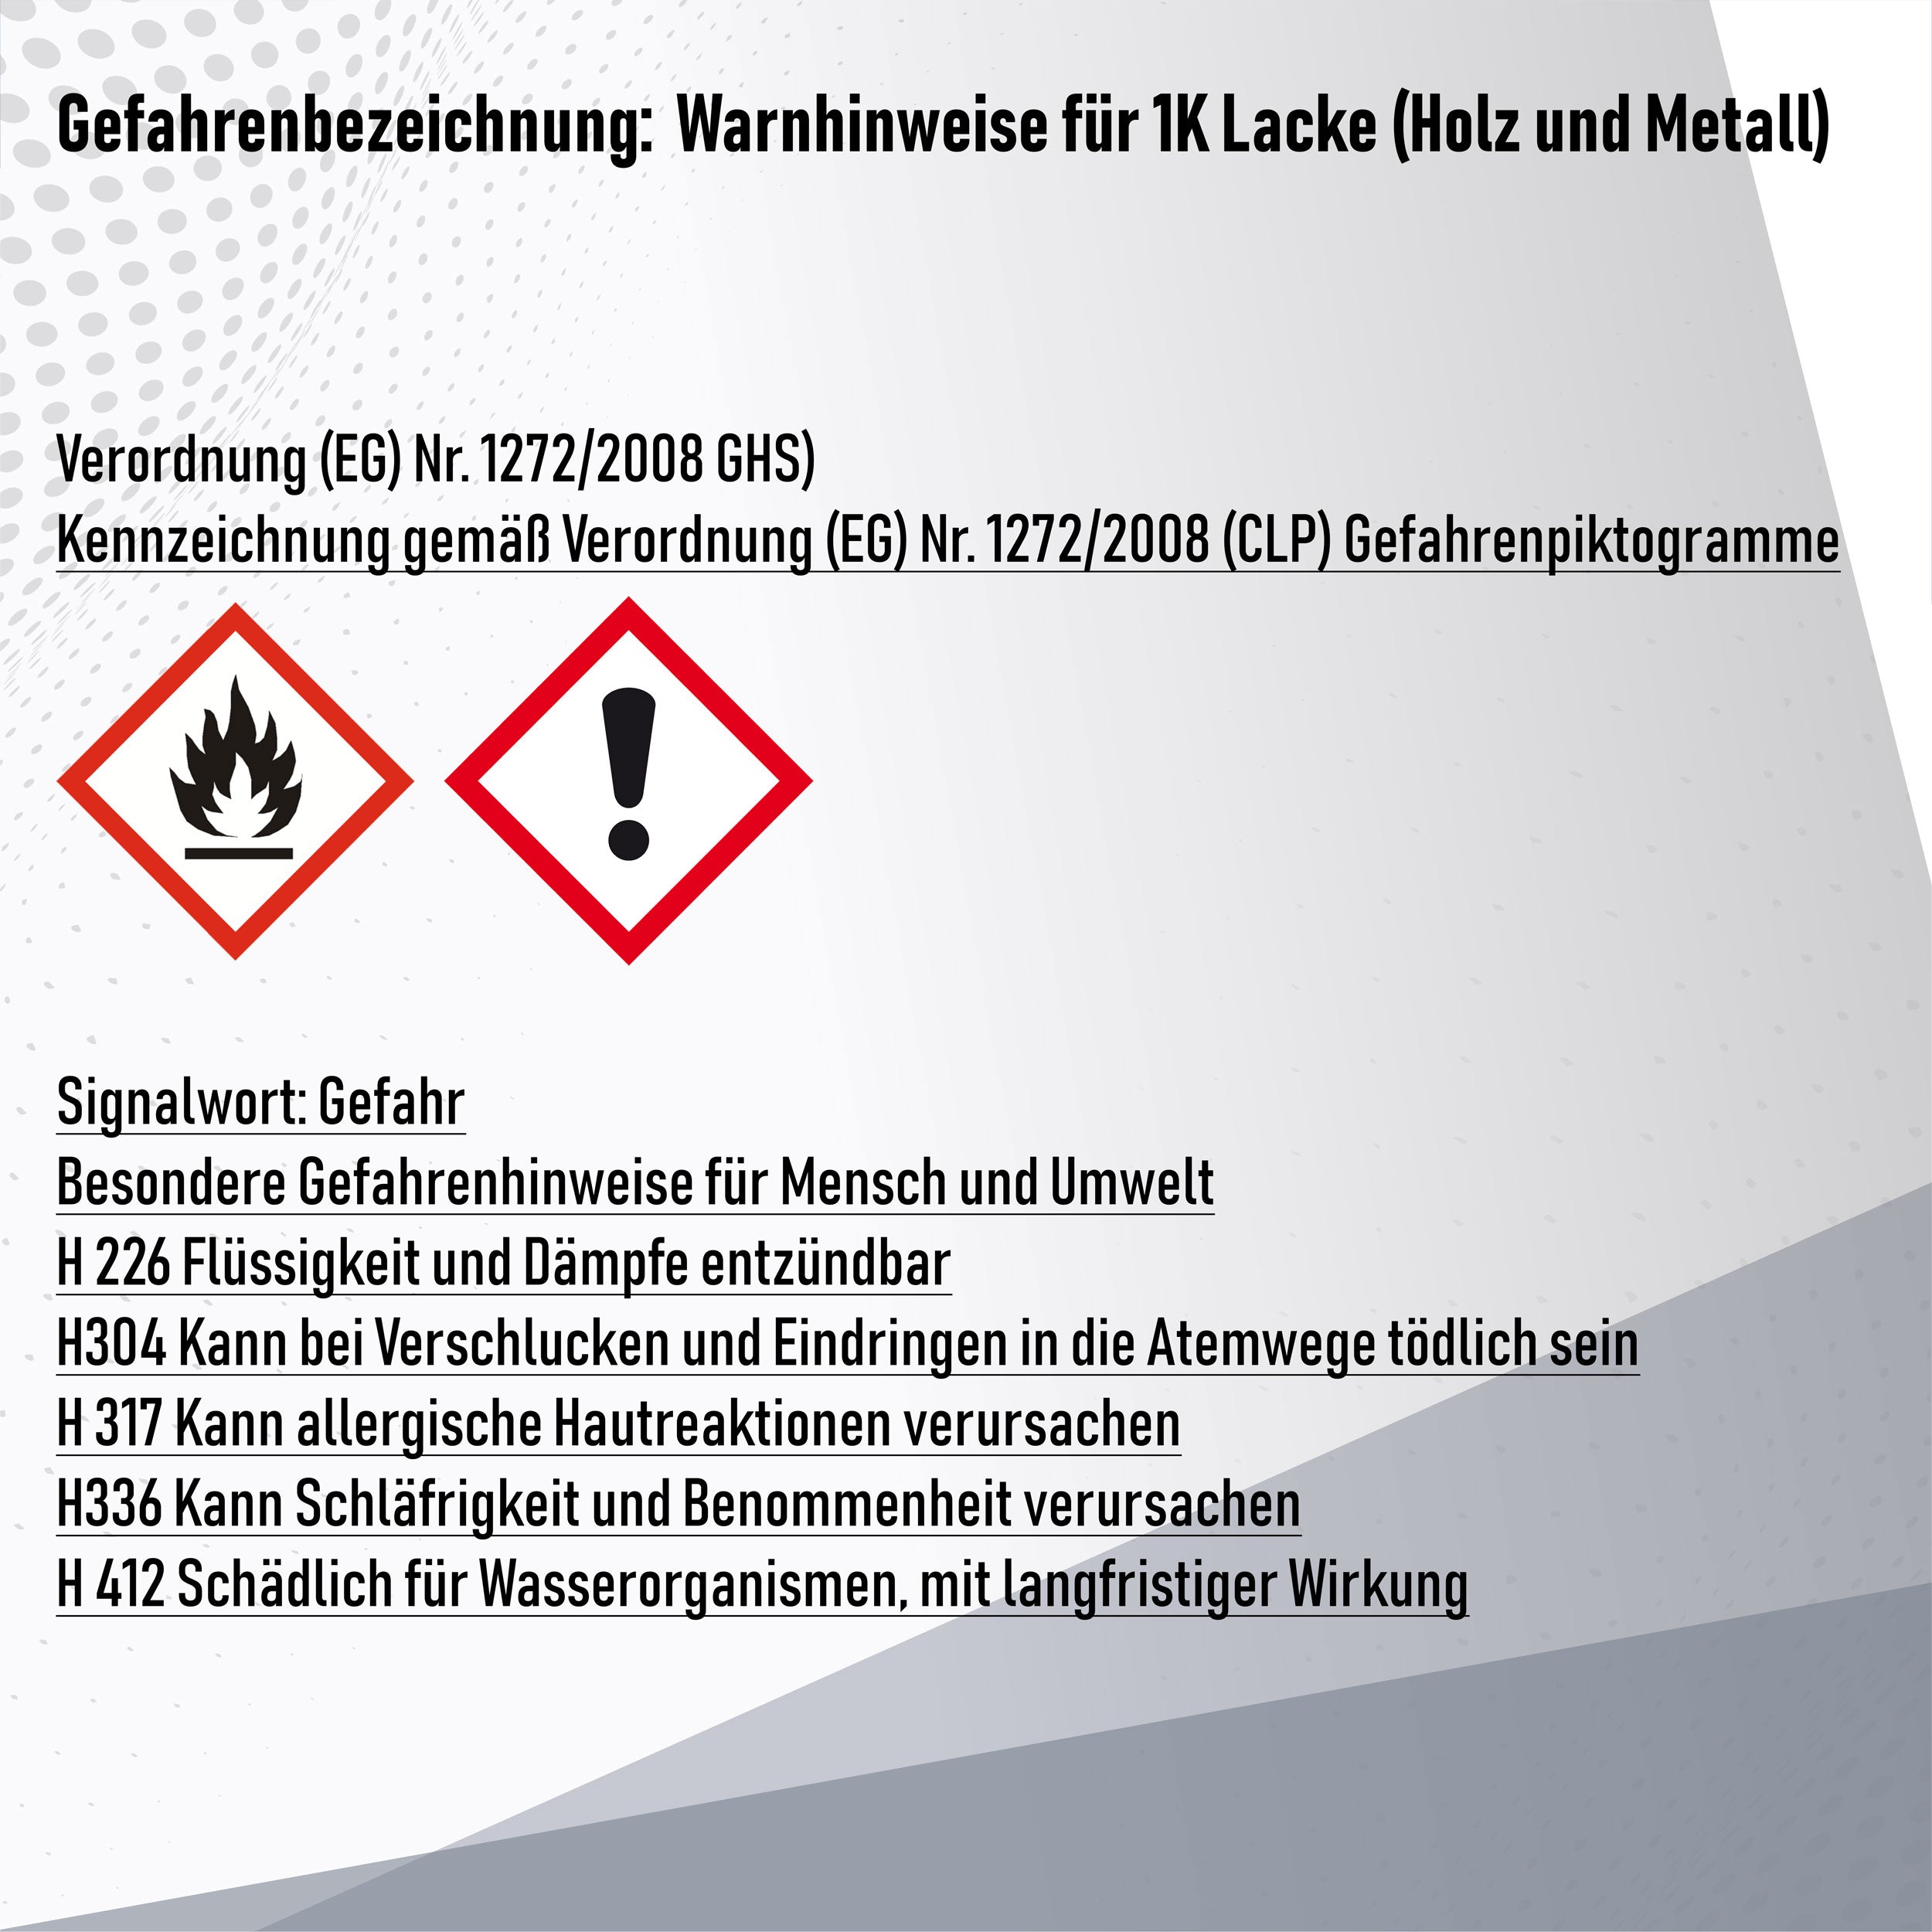 Buntlack RAL 5003 Saphirblau- Holzlack Holzfarbe Metallfarbe Lausitzer Farbwerke